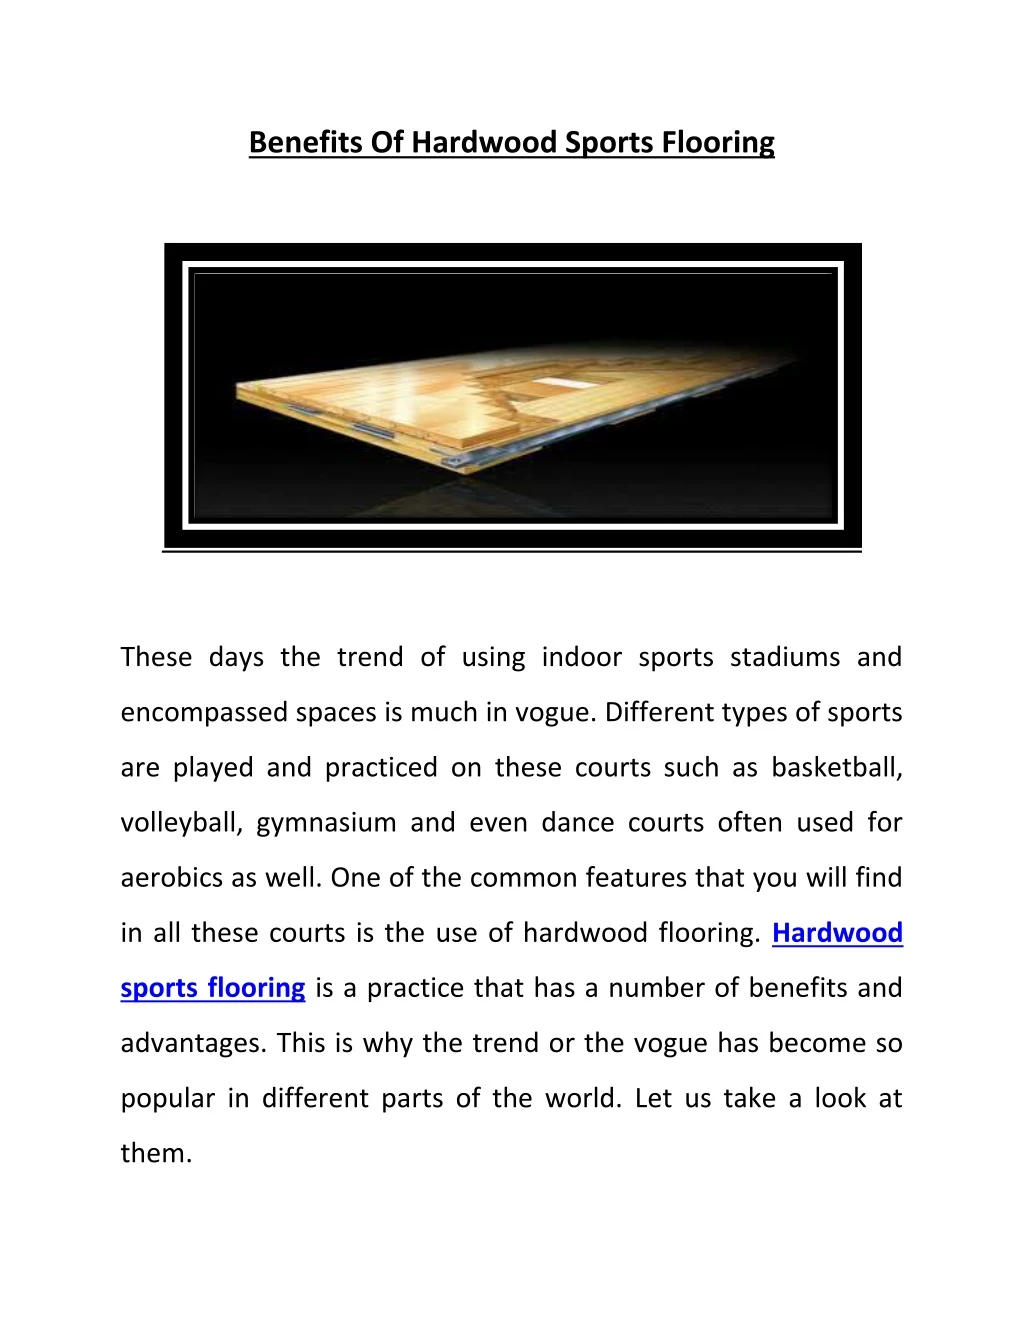 benefits of hardwood sports flooring